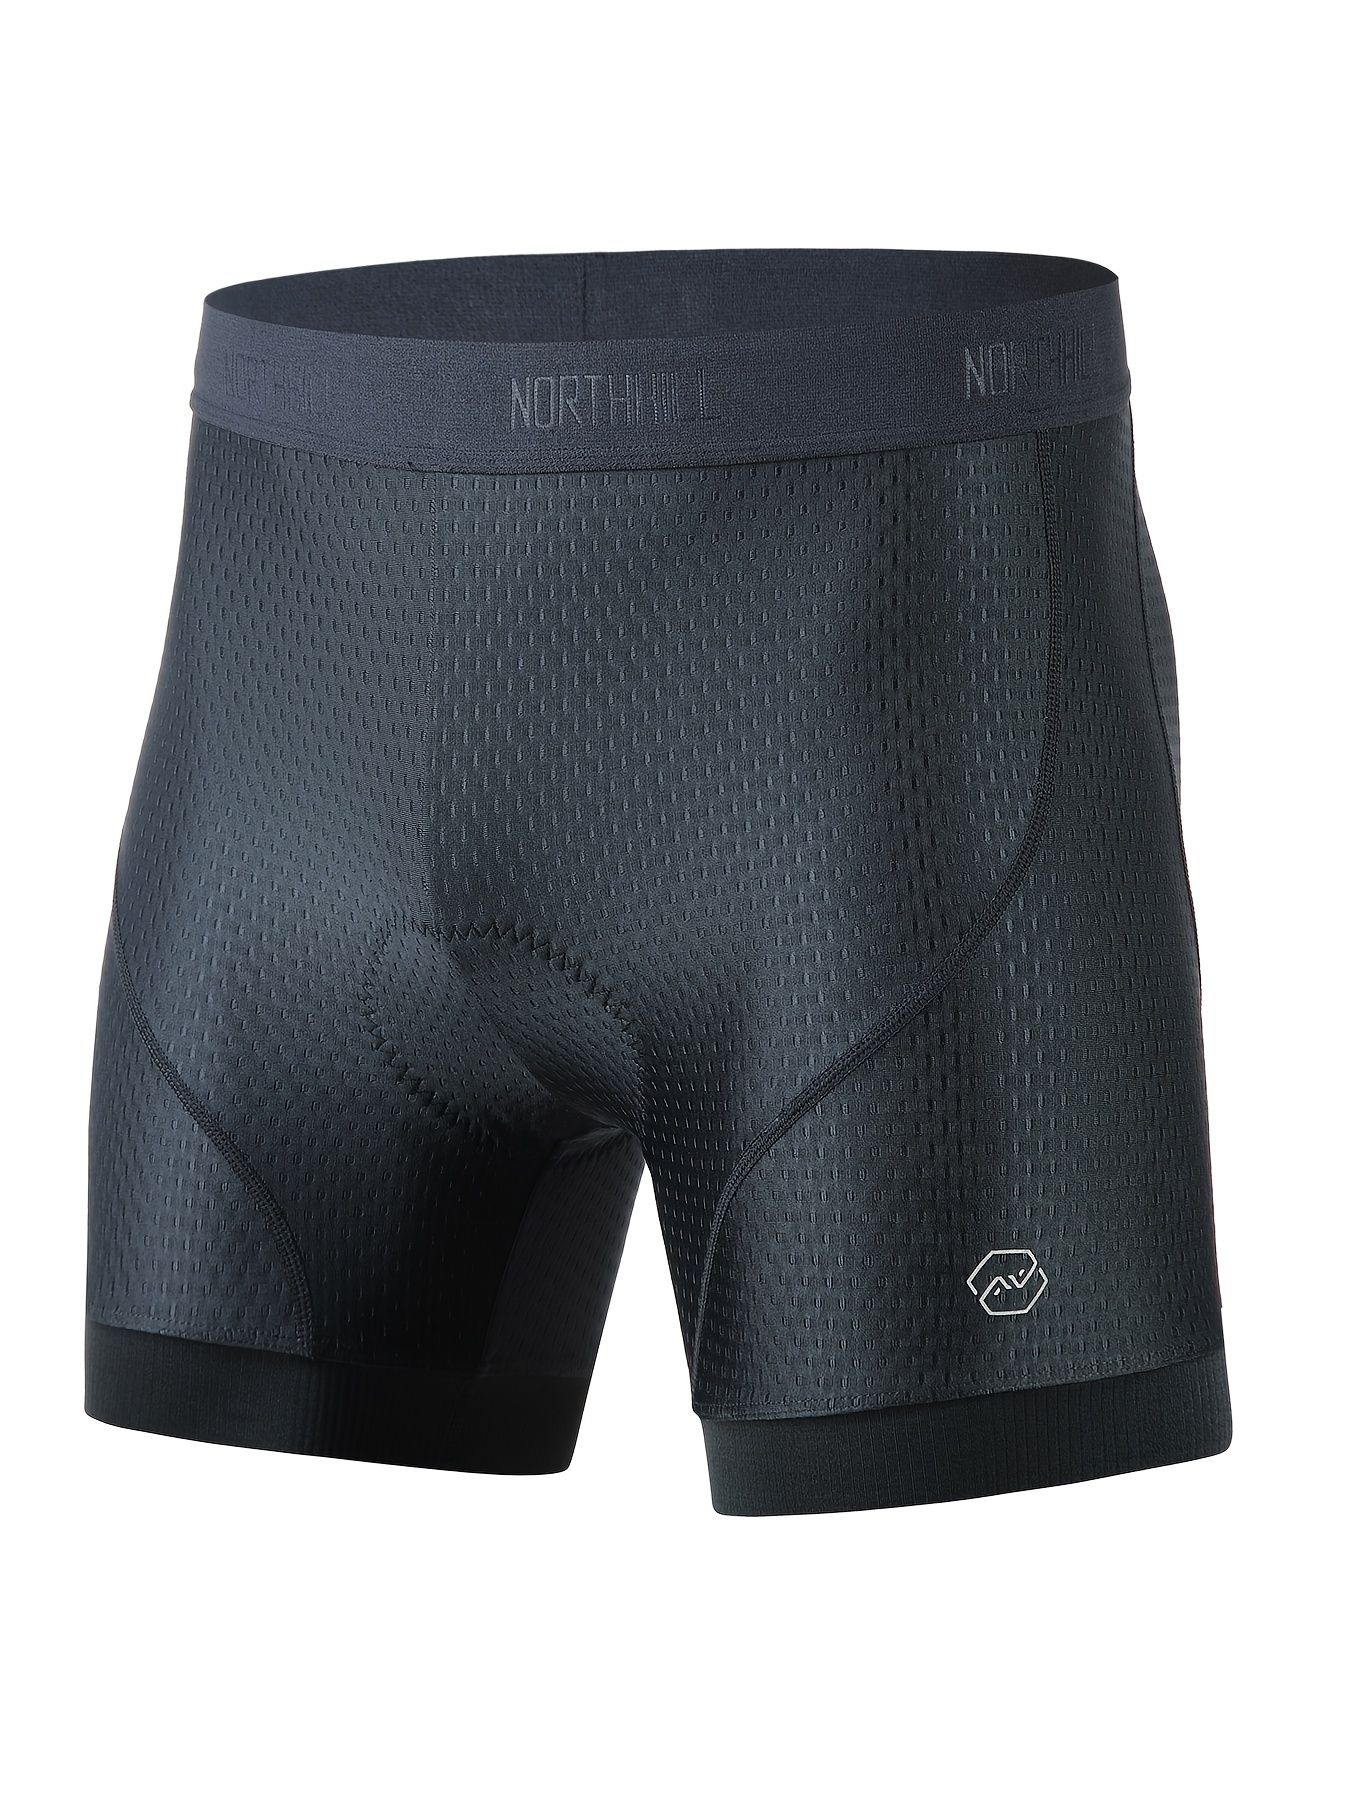 NEWBOLER GEL Cycling Shorts 5D 20D Men's Underpants Mountain Bike